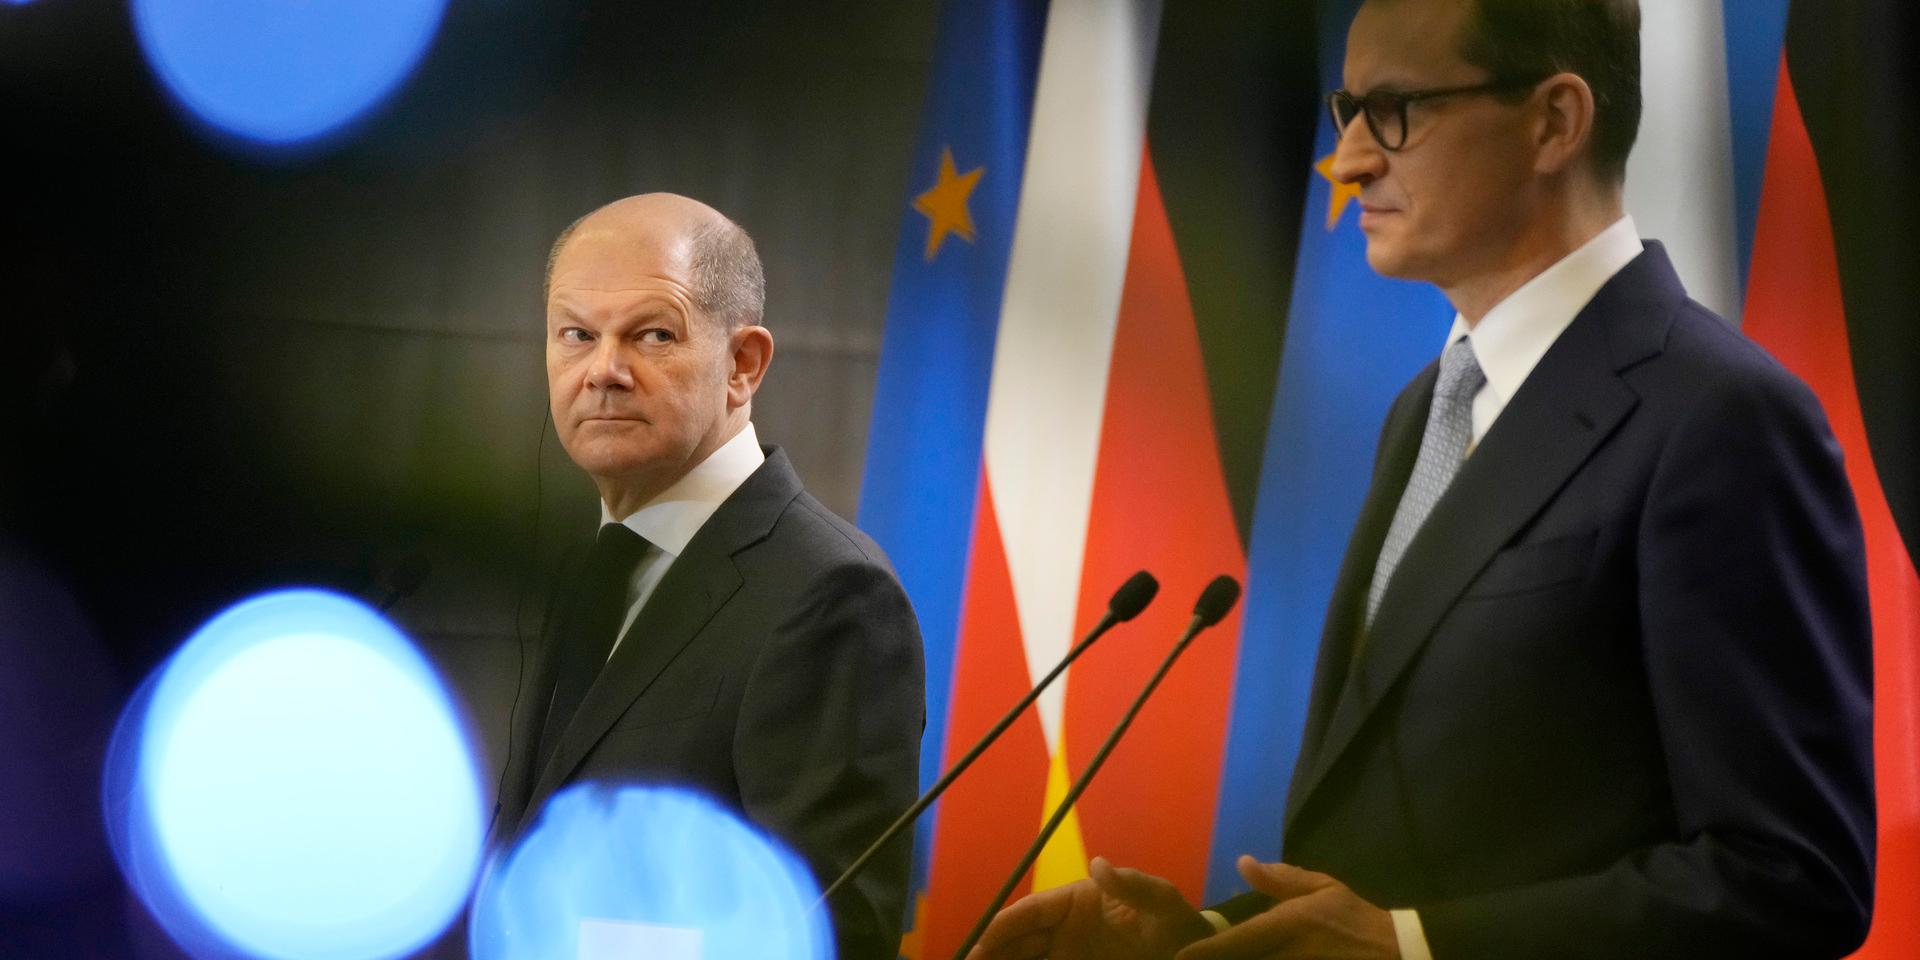 Tysklands nye förbundskansler Olaf Scholz mötte Polens premiärminister Mateusz Morawiecki i Warszawa under söndagen.